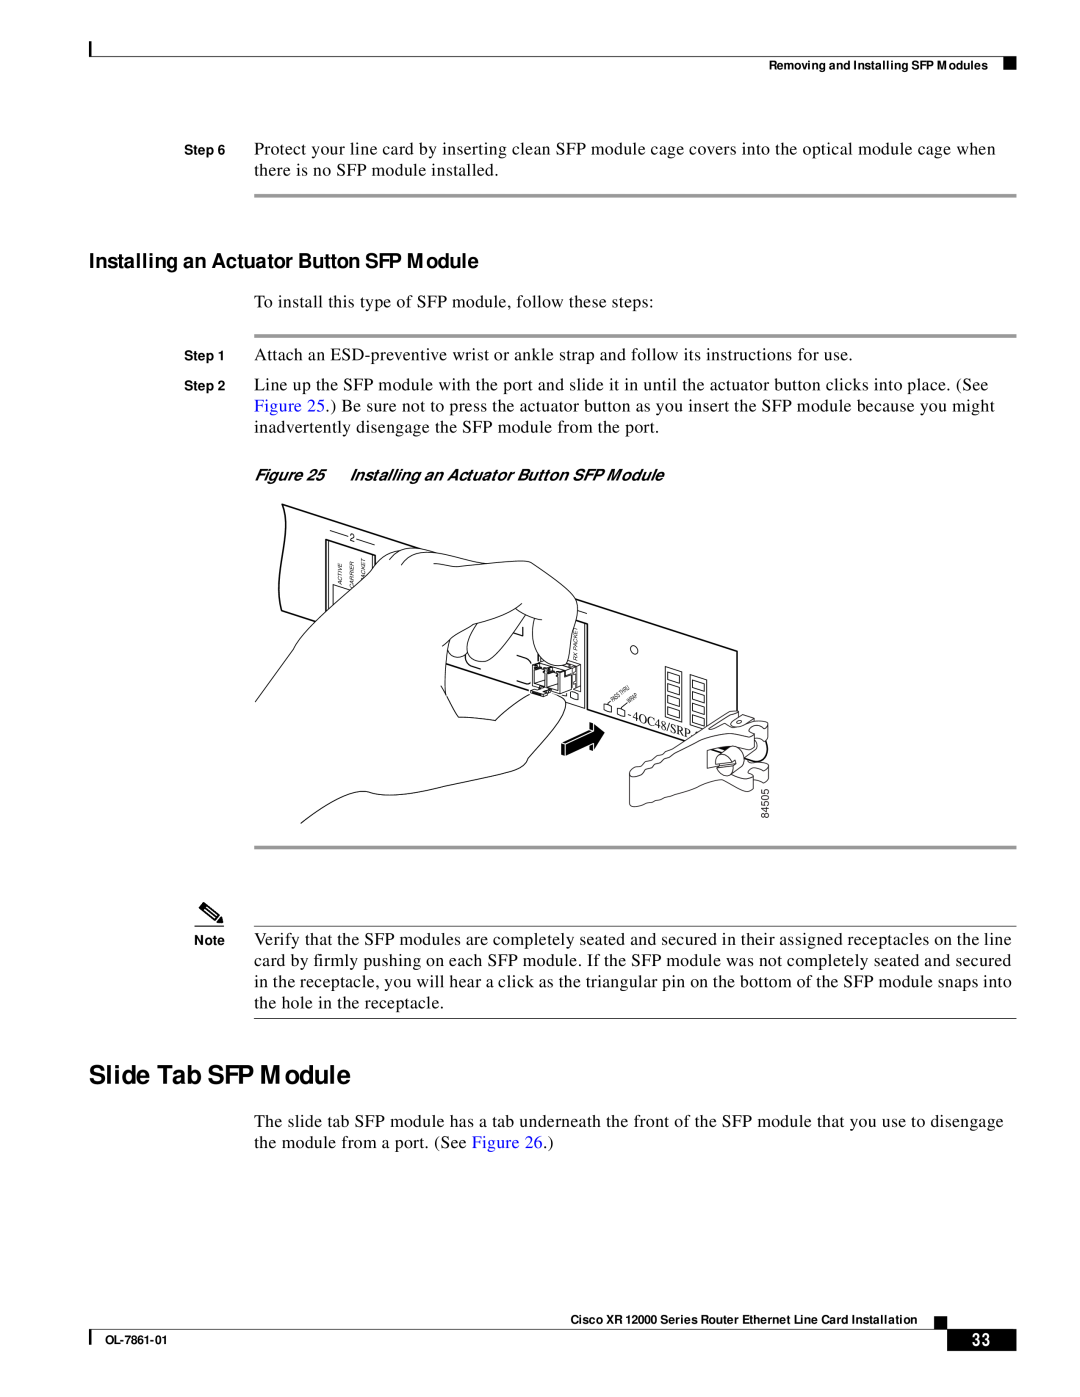 Cisco Systems OL-7861-01 manual Slide Tab SFP Module, Installing an Actuator Button SFP Module 